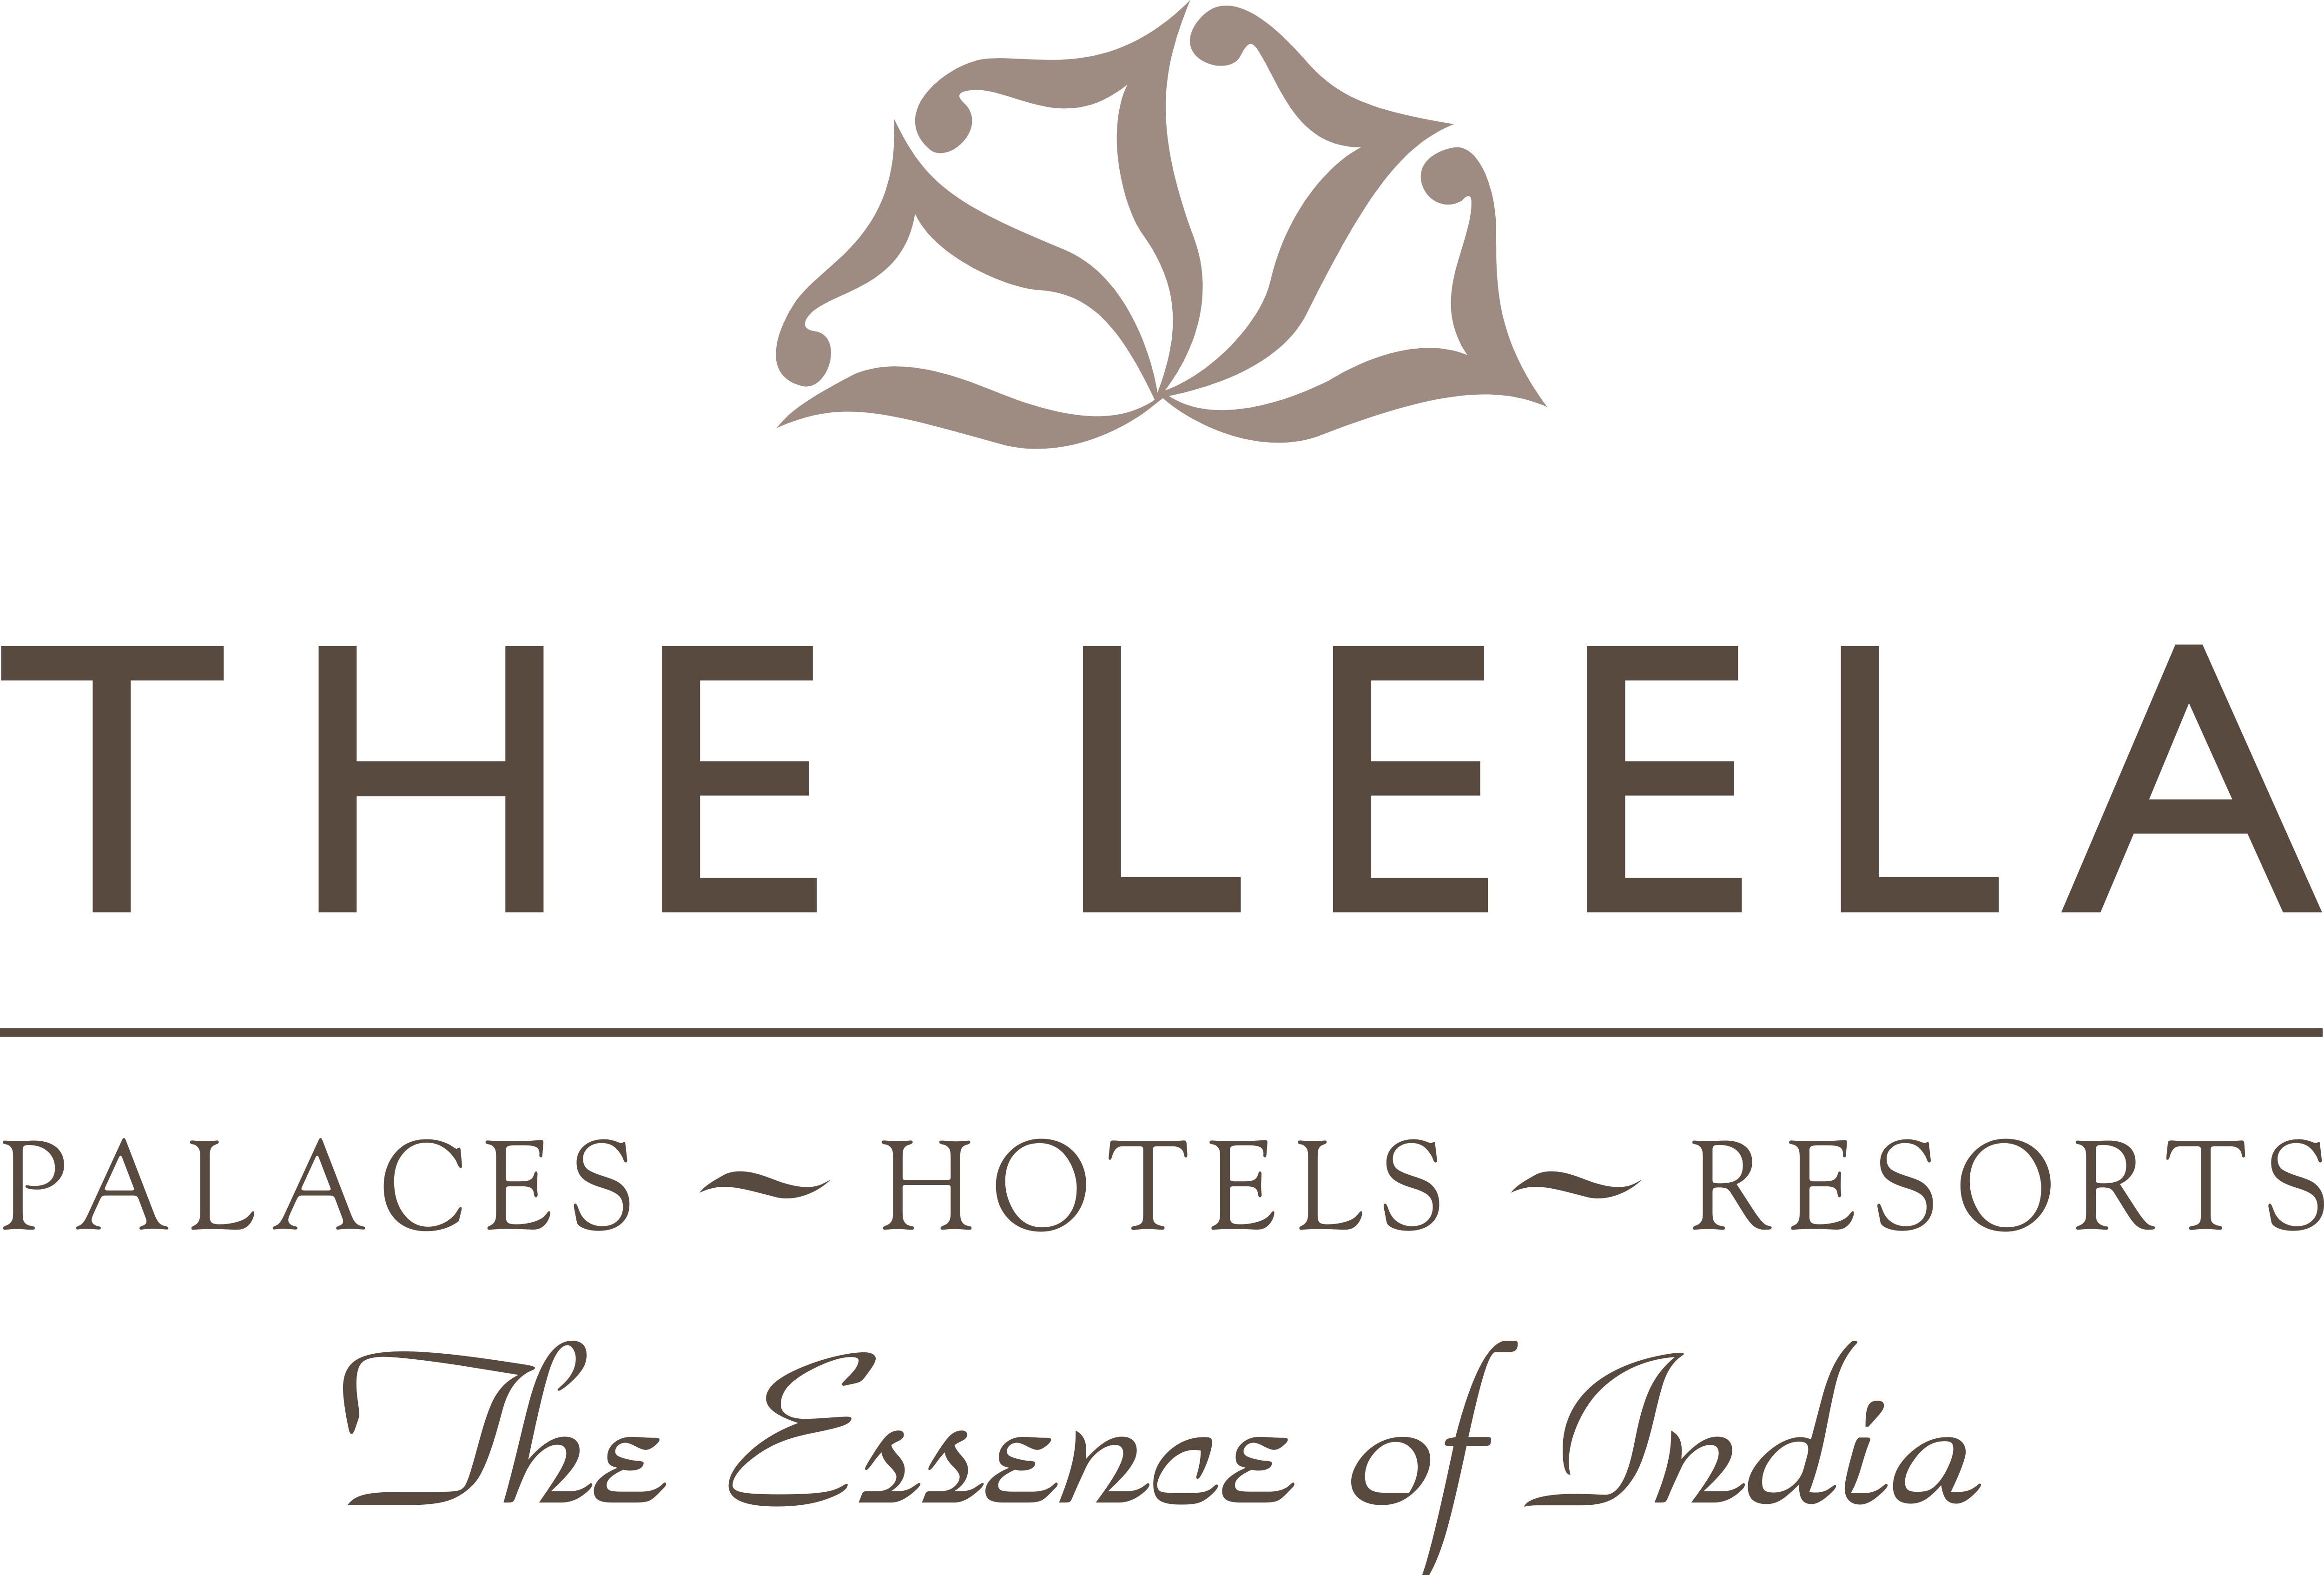 the leela palaces hotels and resorts logo old